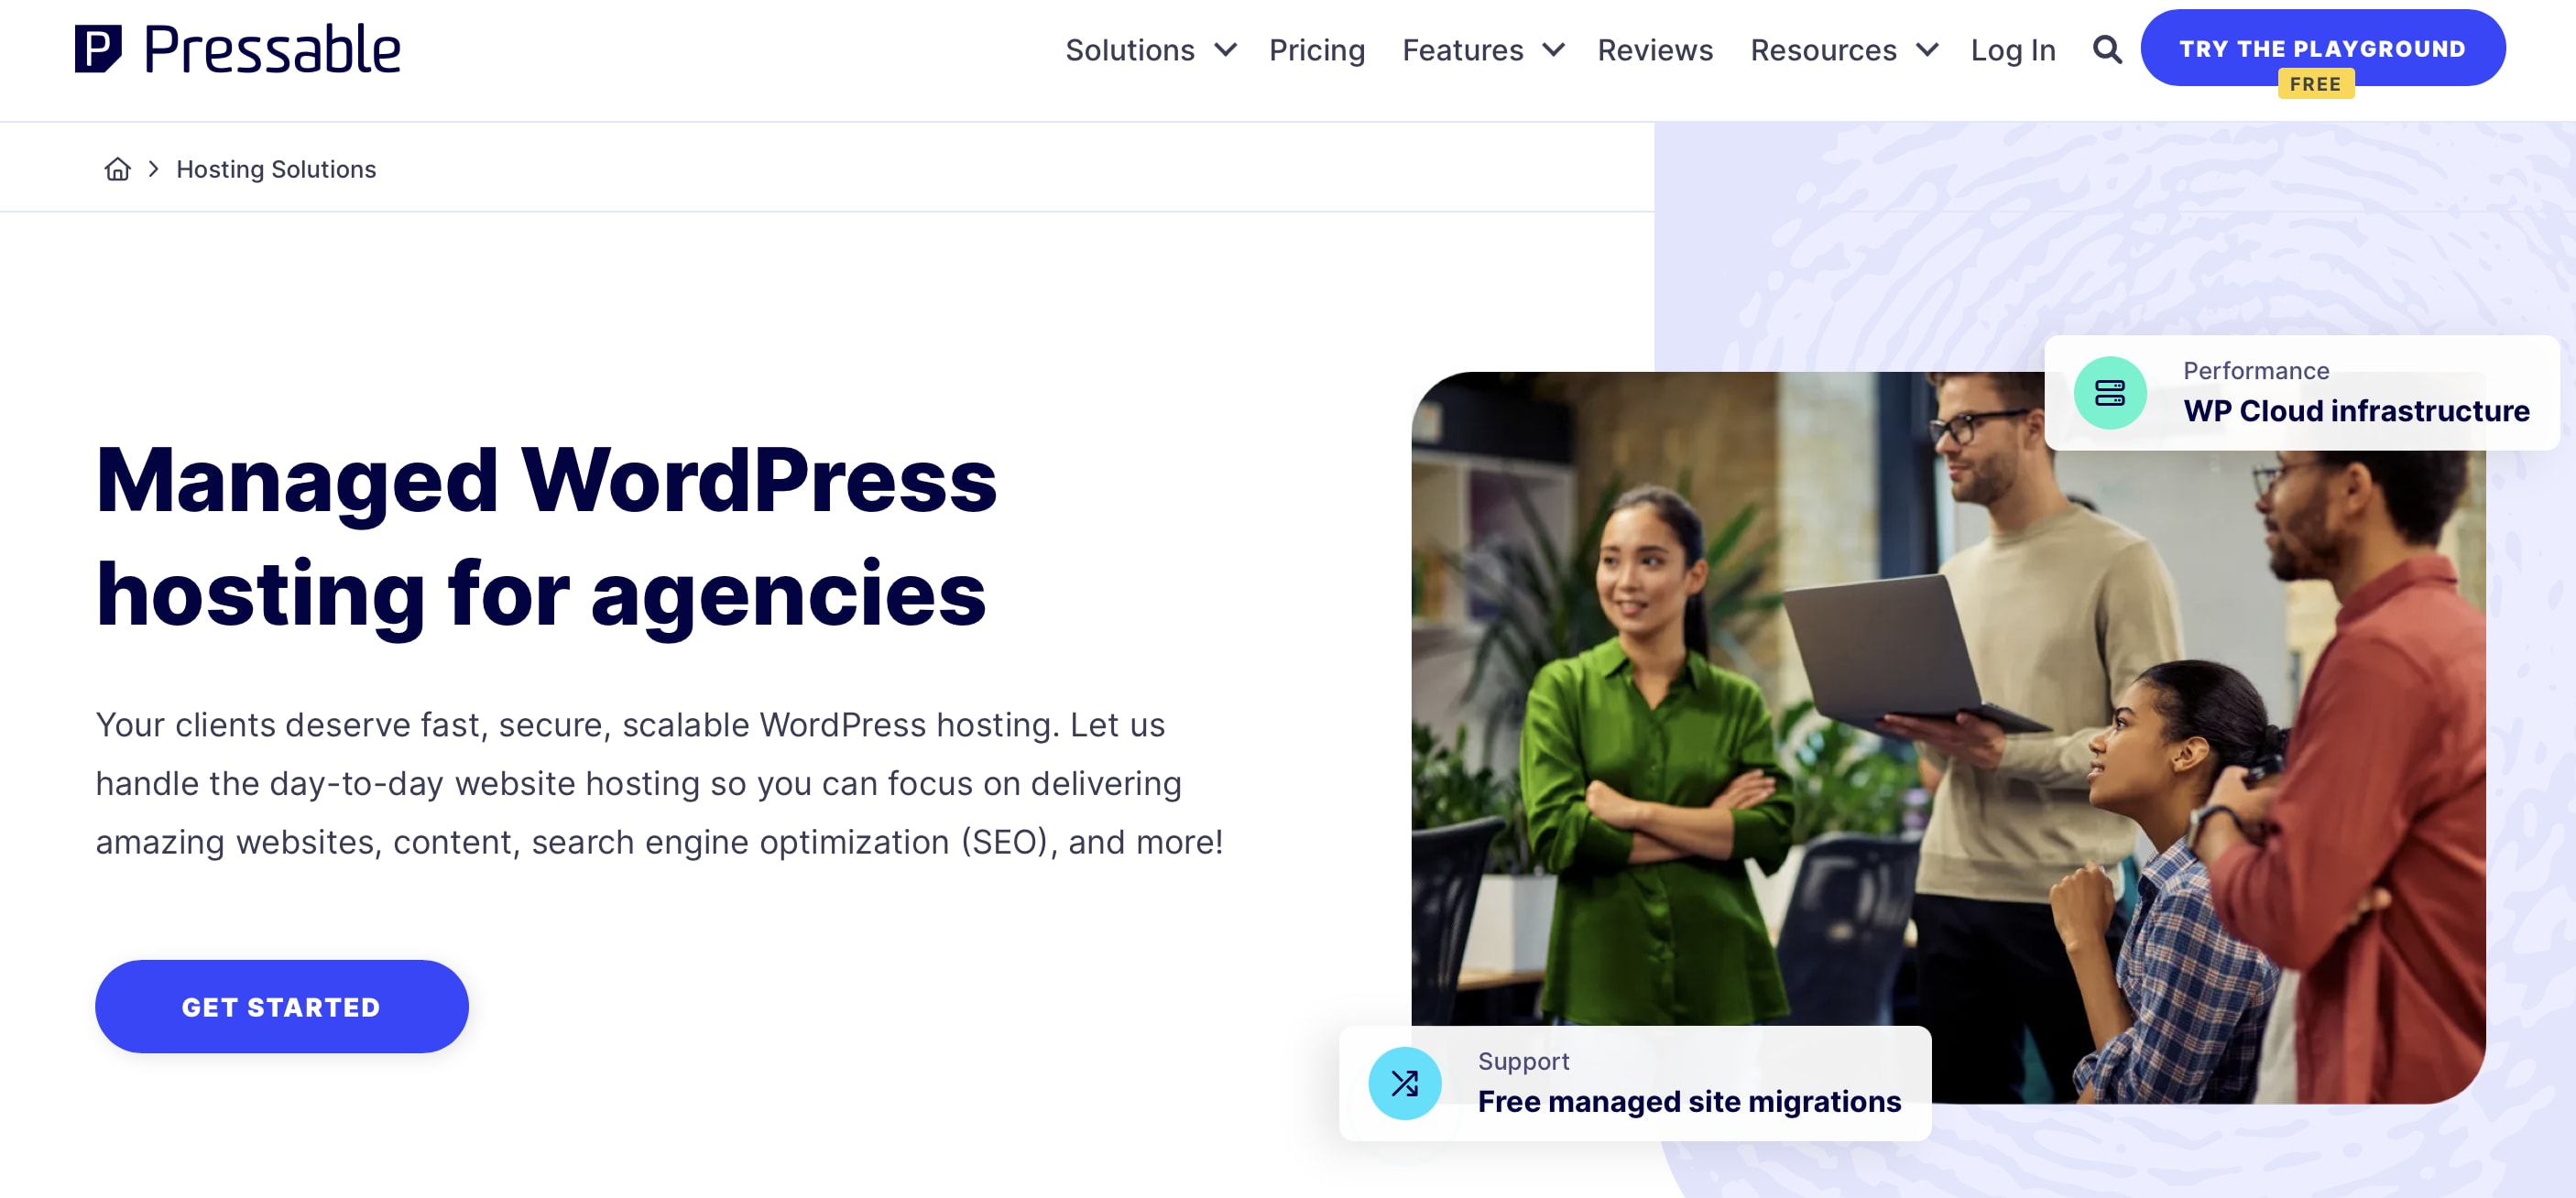 Pressable WordPress hosting for agencies.